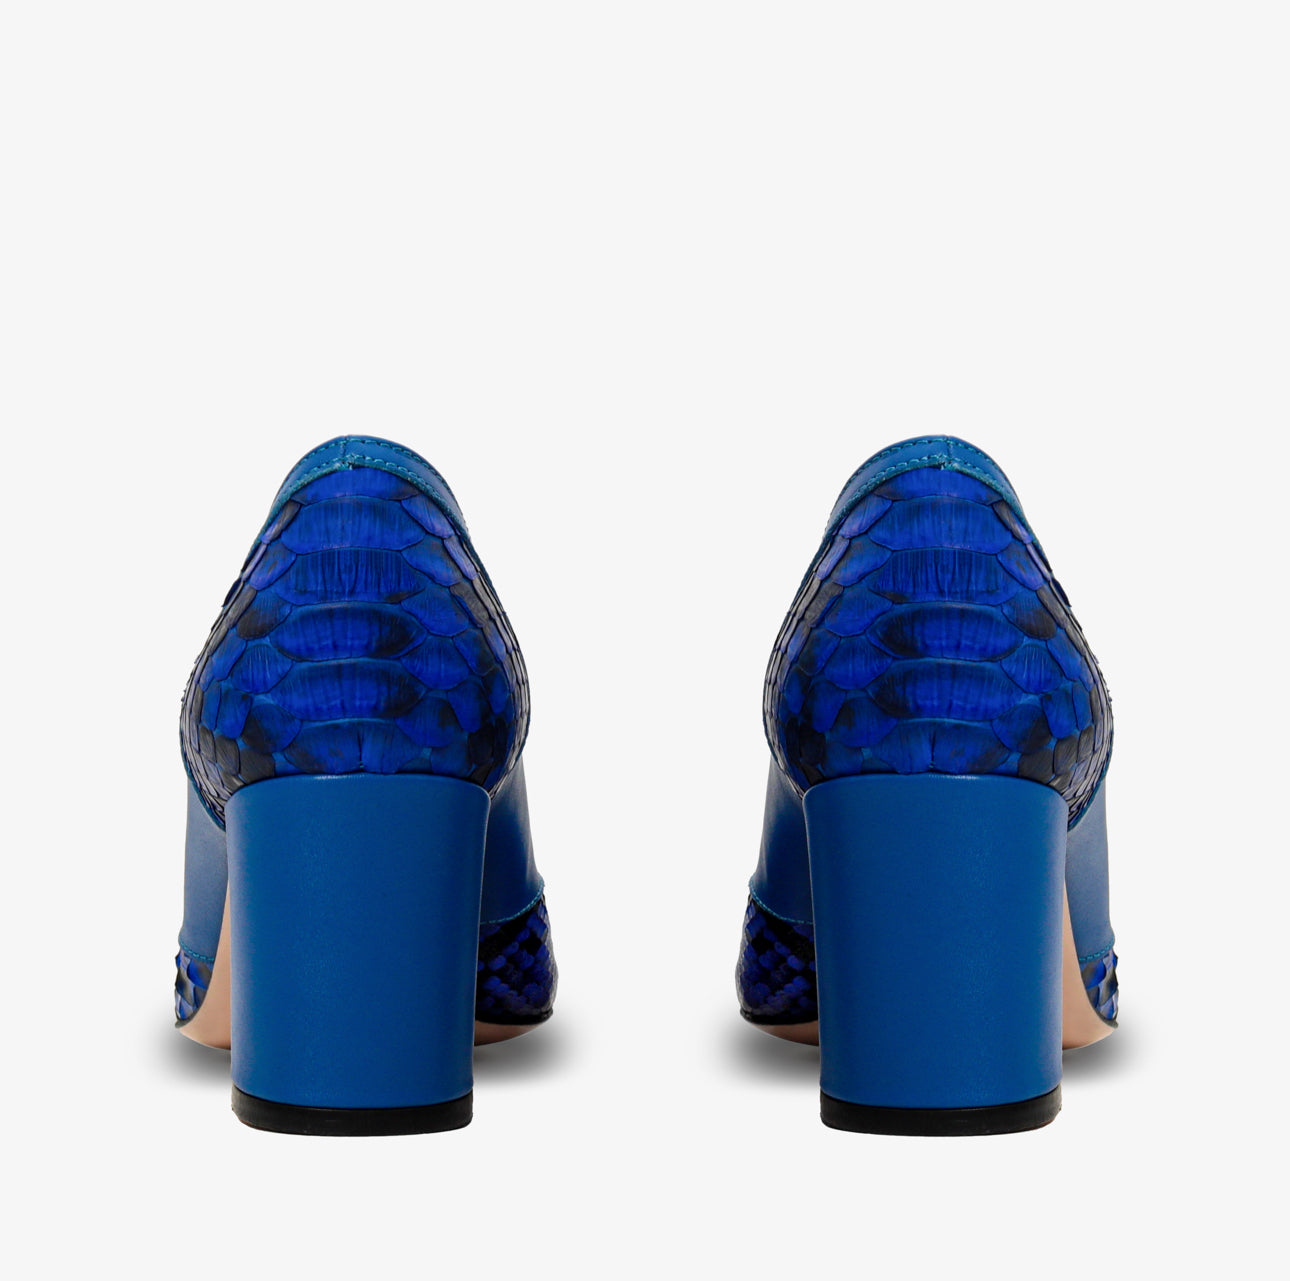 The Toskana Sax Blue Pythn Leather Block Heel Pump Women Shoe